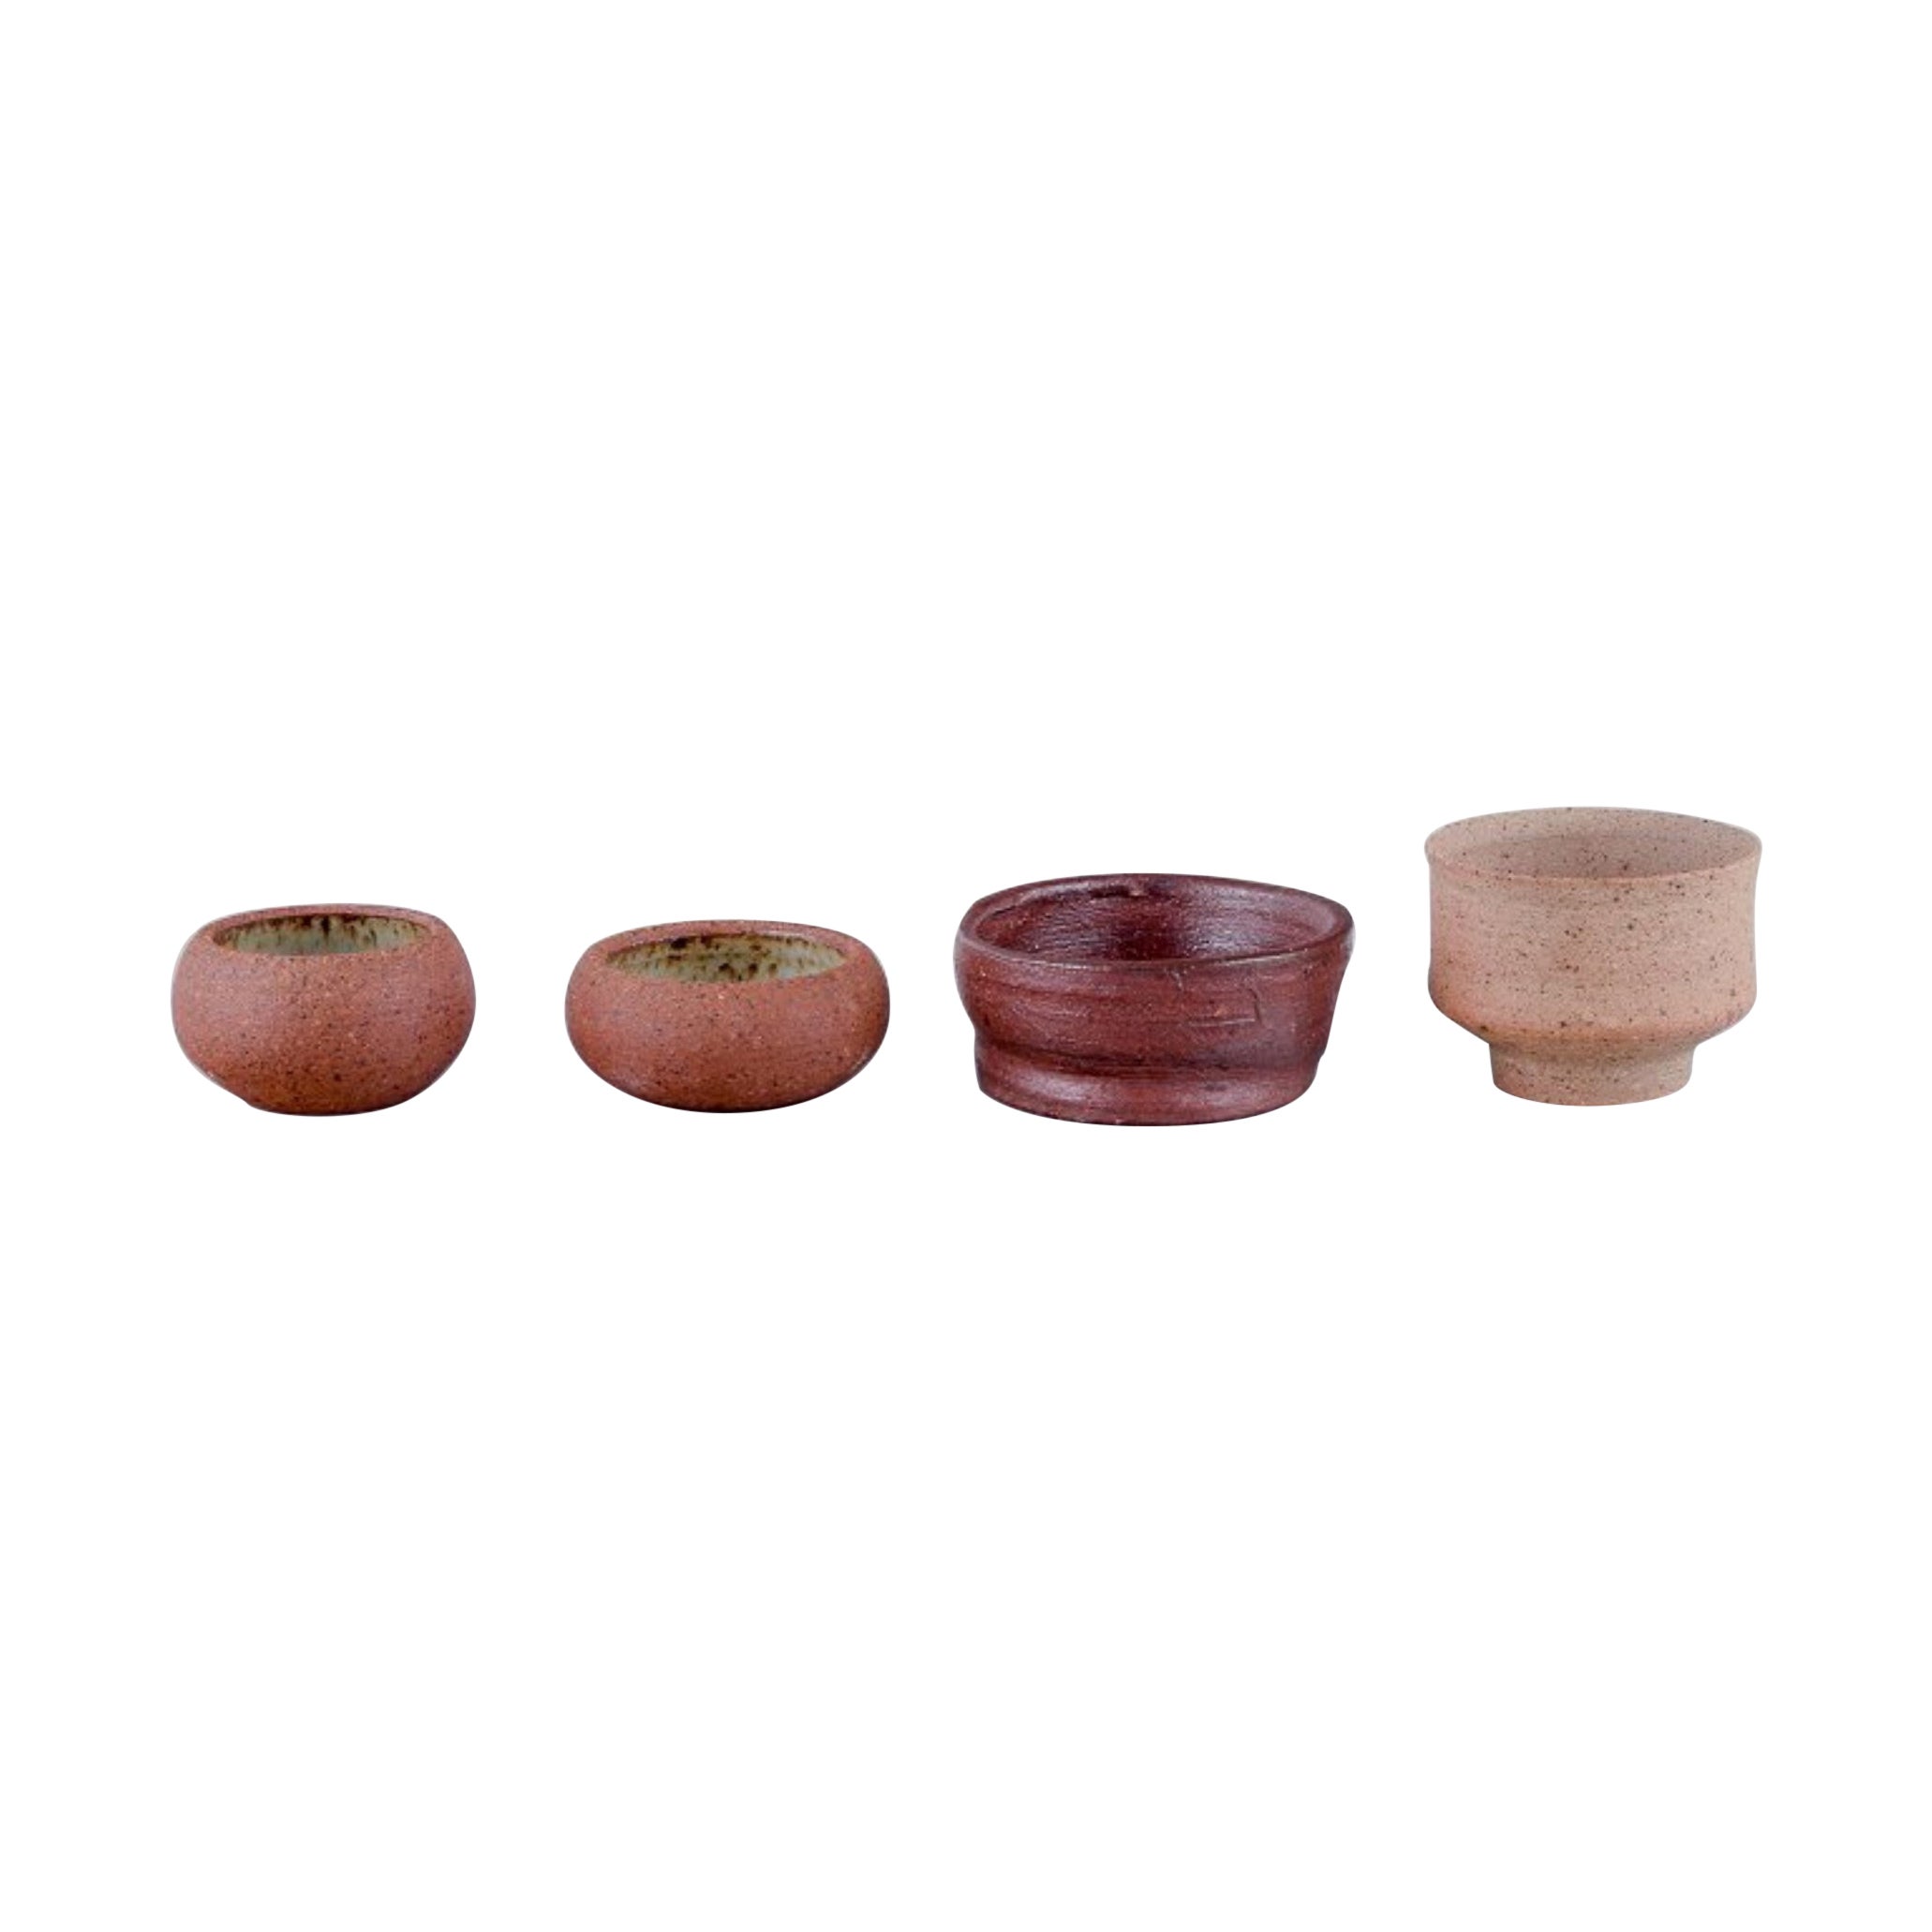 Mogens Nielsen, Nysted / Stouby Keramik und andere. Vier Pieces aus Keramik